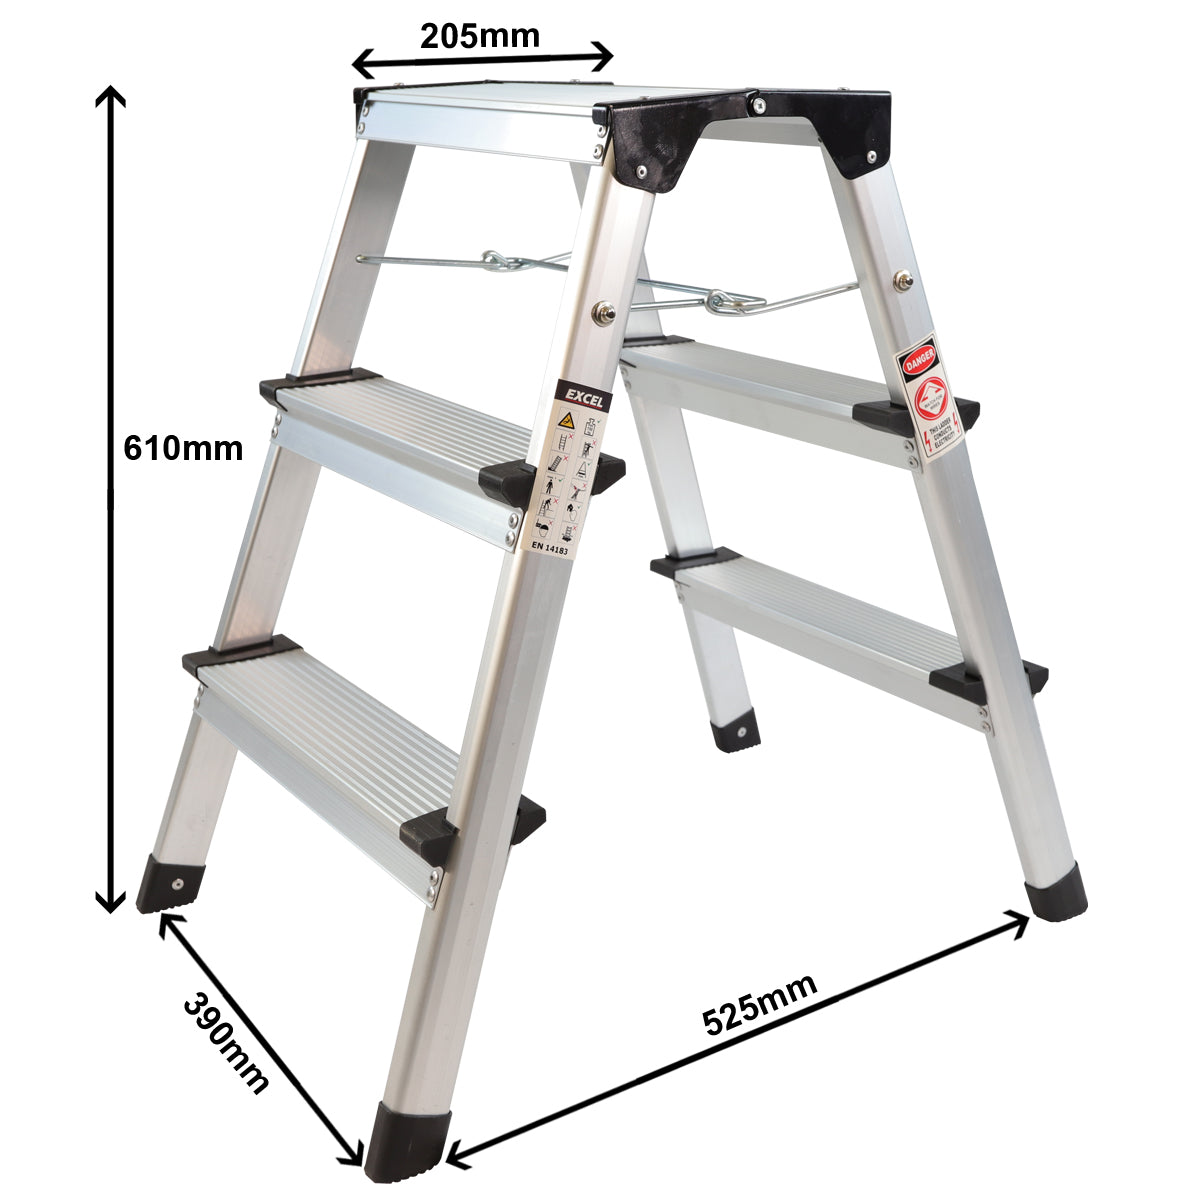 Excel Aluminium Stool Ladder 3 Tread with Fibreglass Folding Hop Up